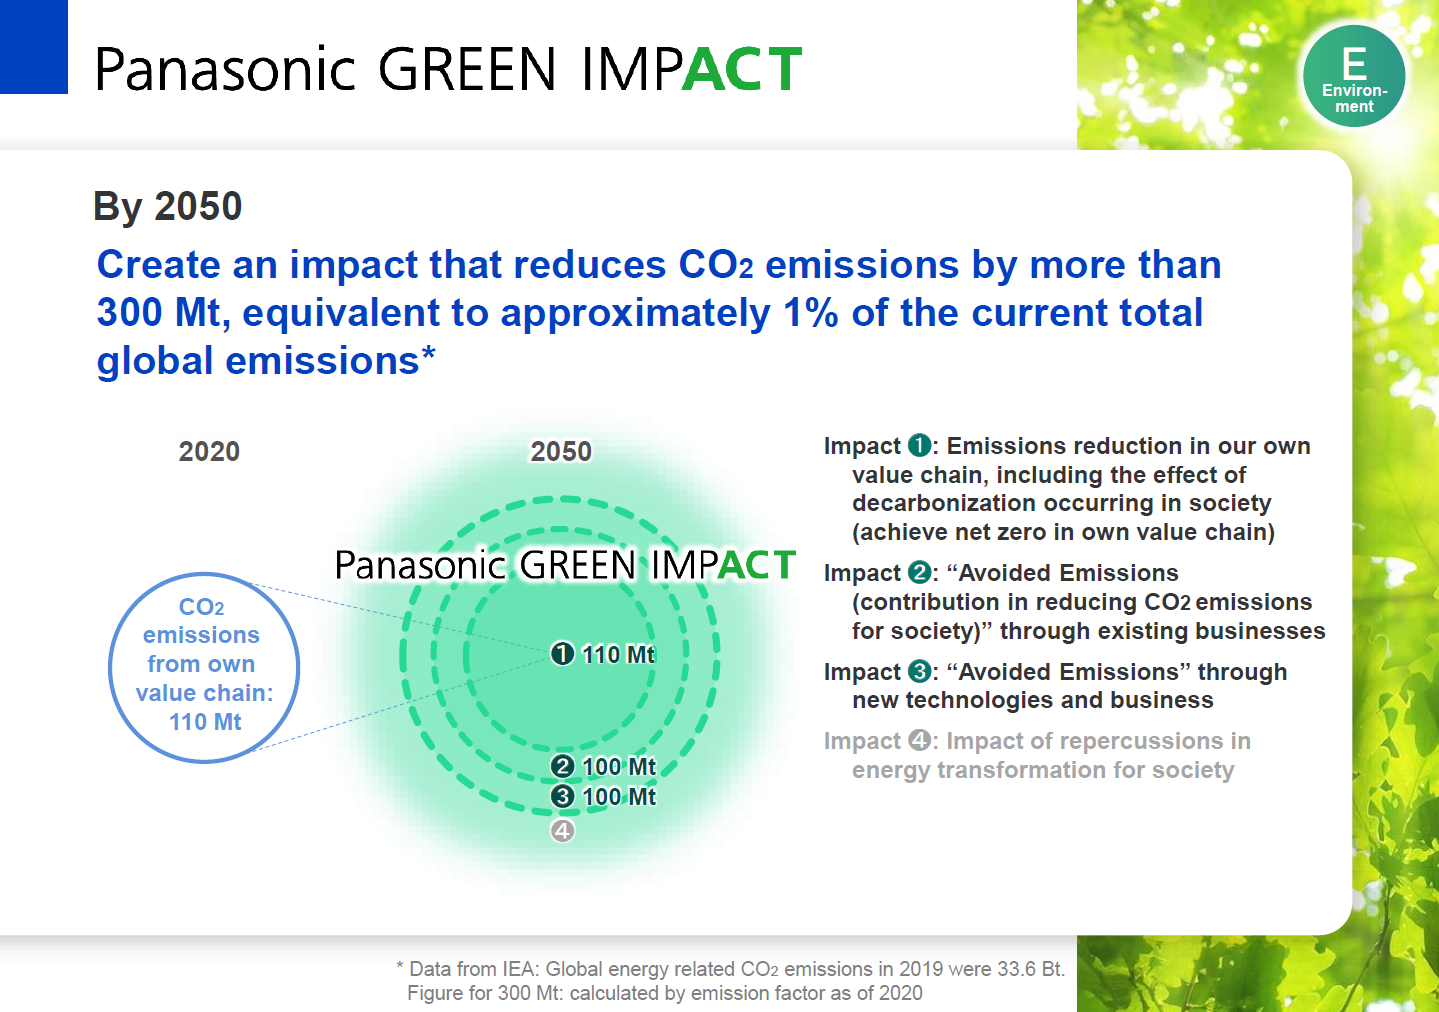 Figure: Panasonic GREEN IMPACT